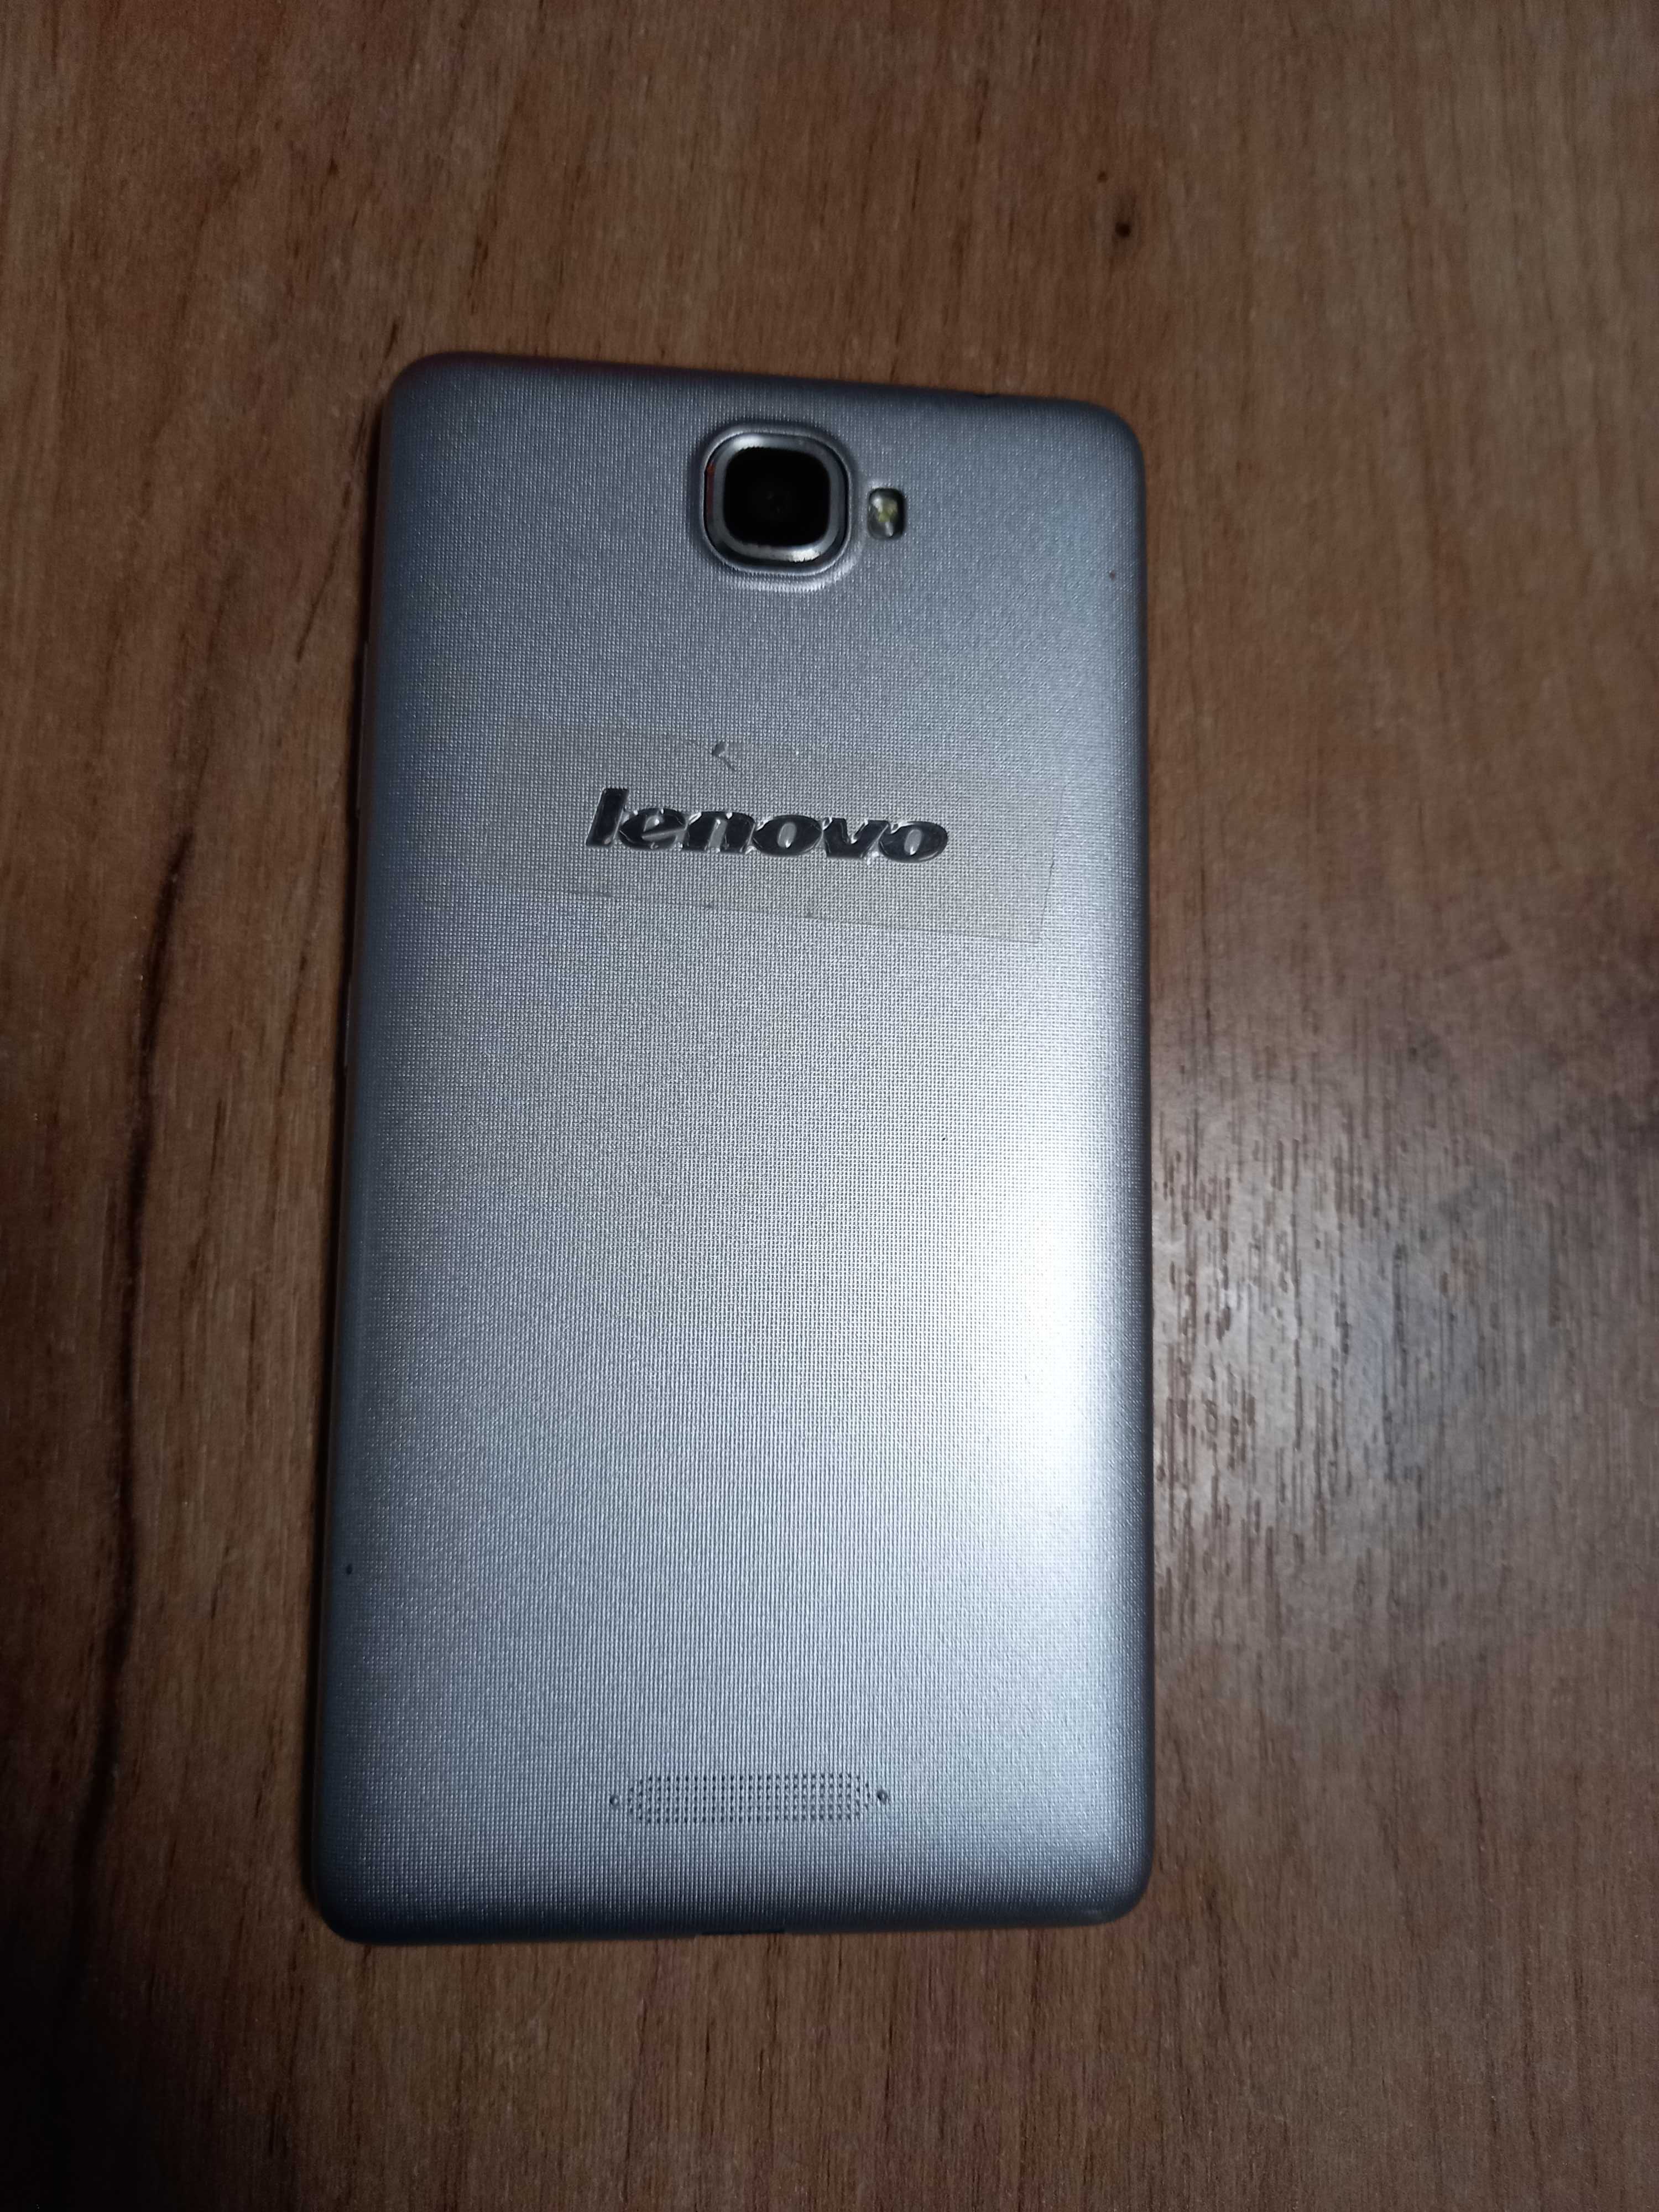 Lenovo S856 (4 ядра, память 1/8Гб) камера 2/8Мп, Android 4.4)